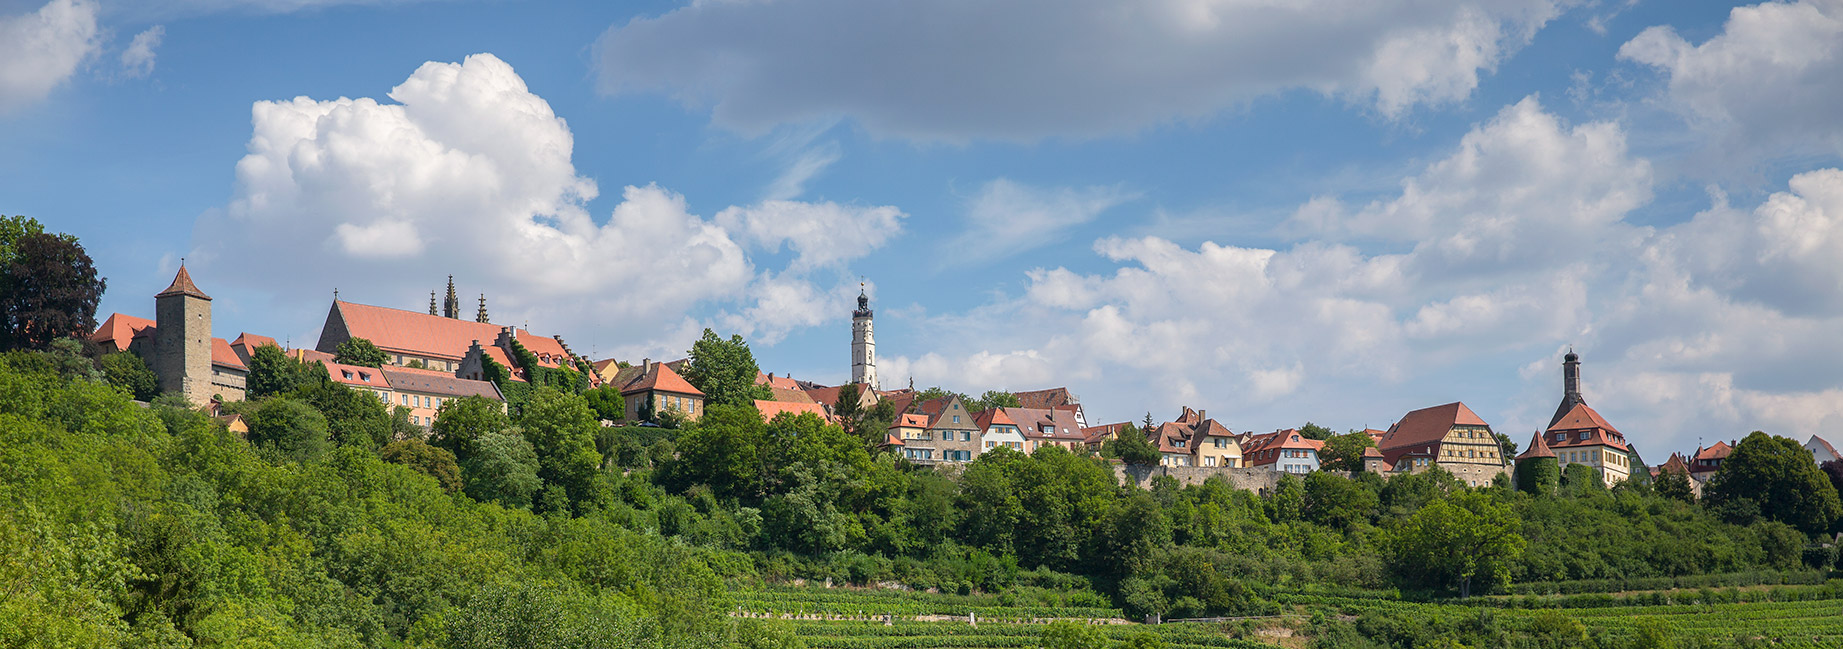 Wandererlebnis Rothenburg ob der Tauber